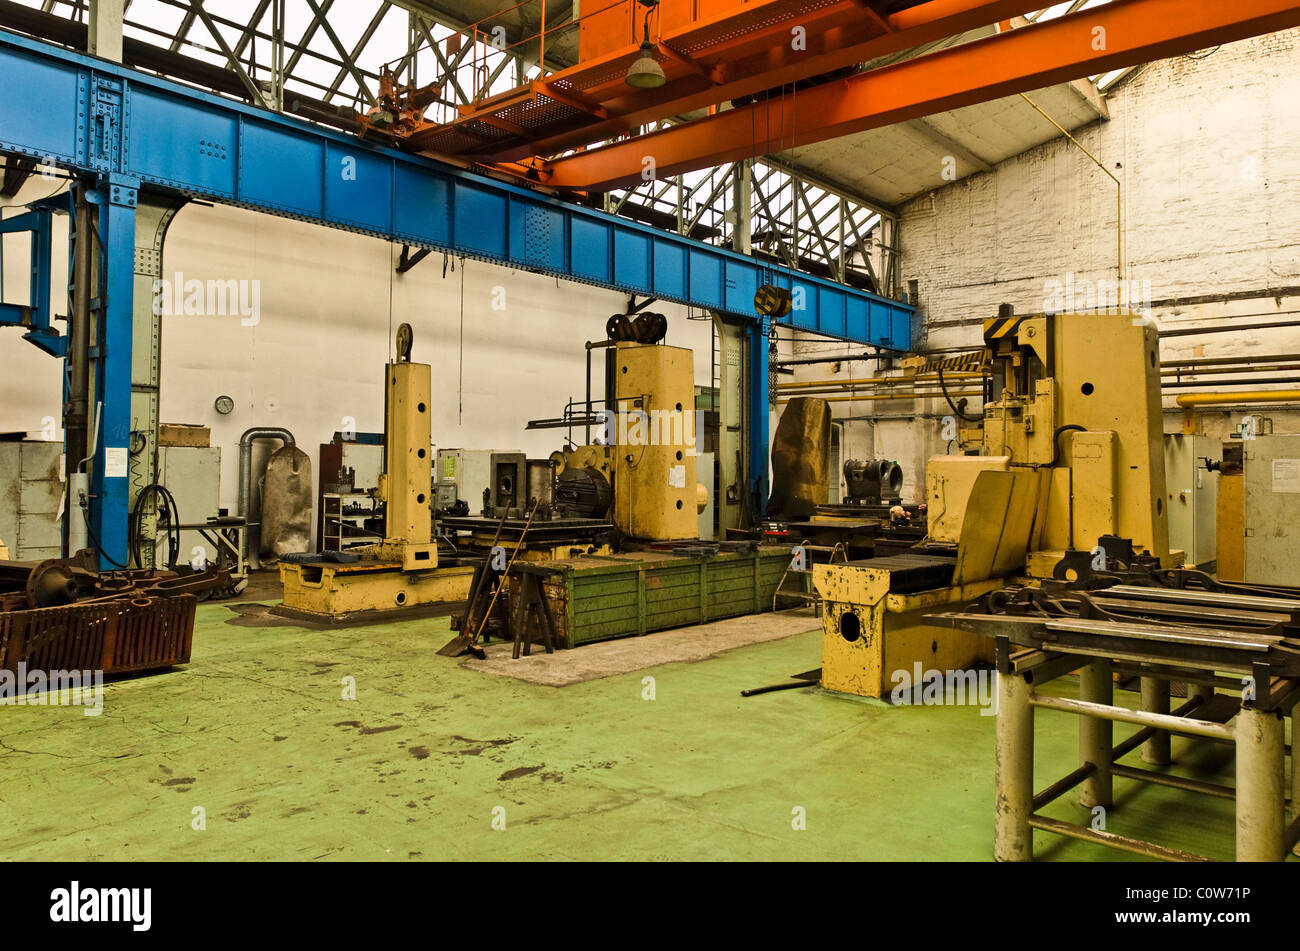 Steam locomotion plant Stock Photo